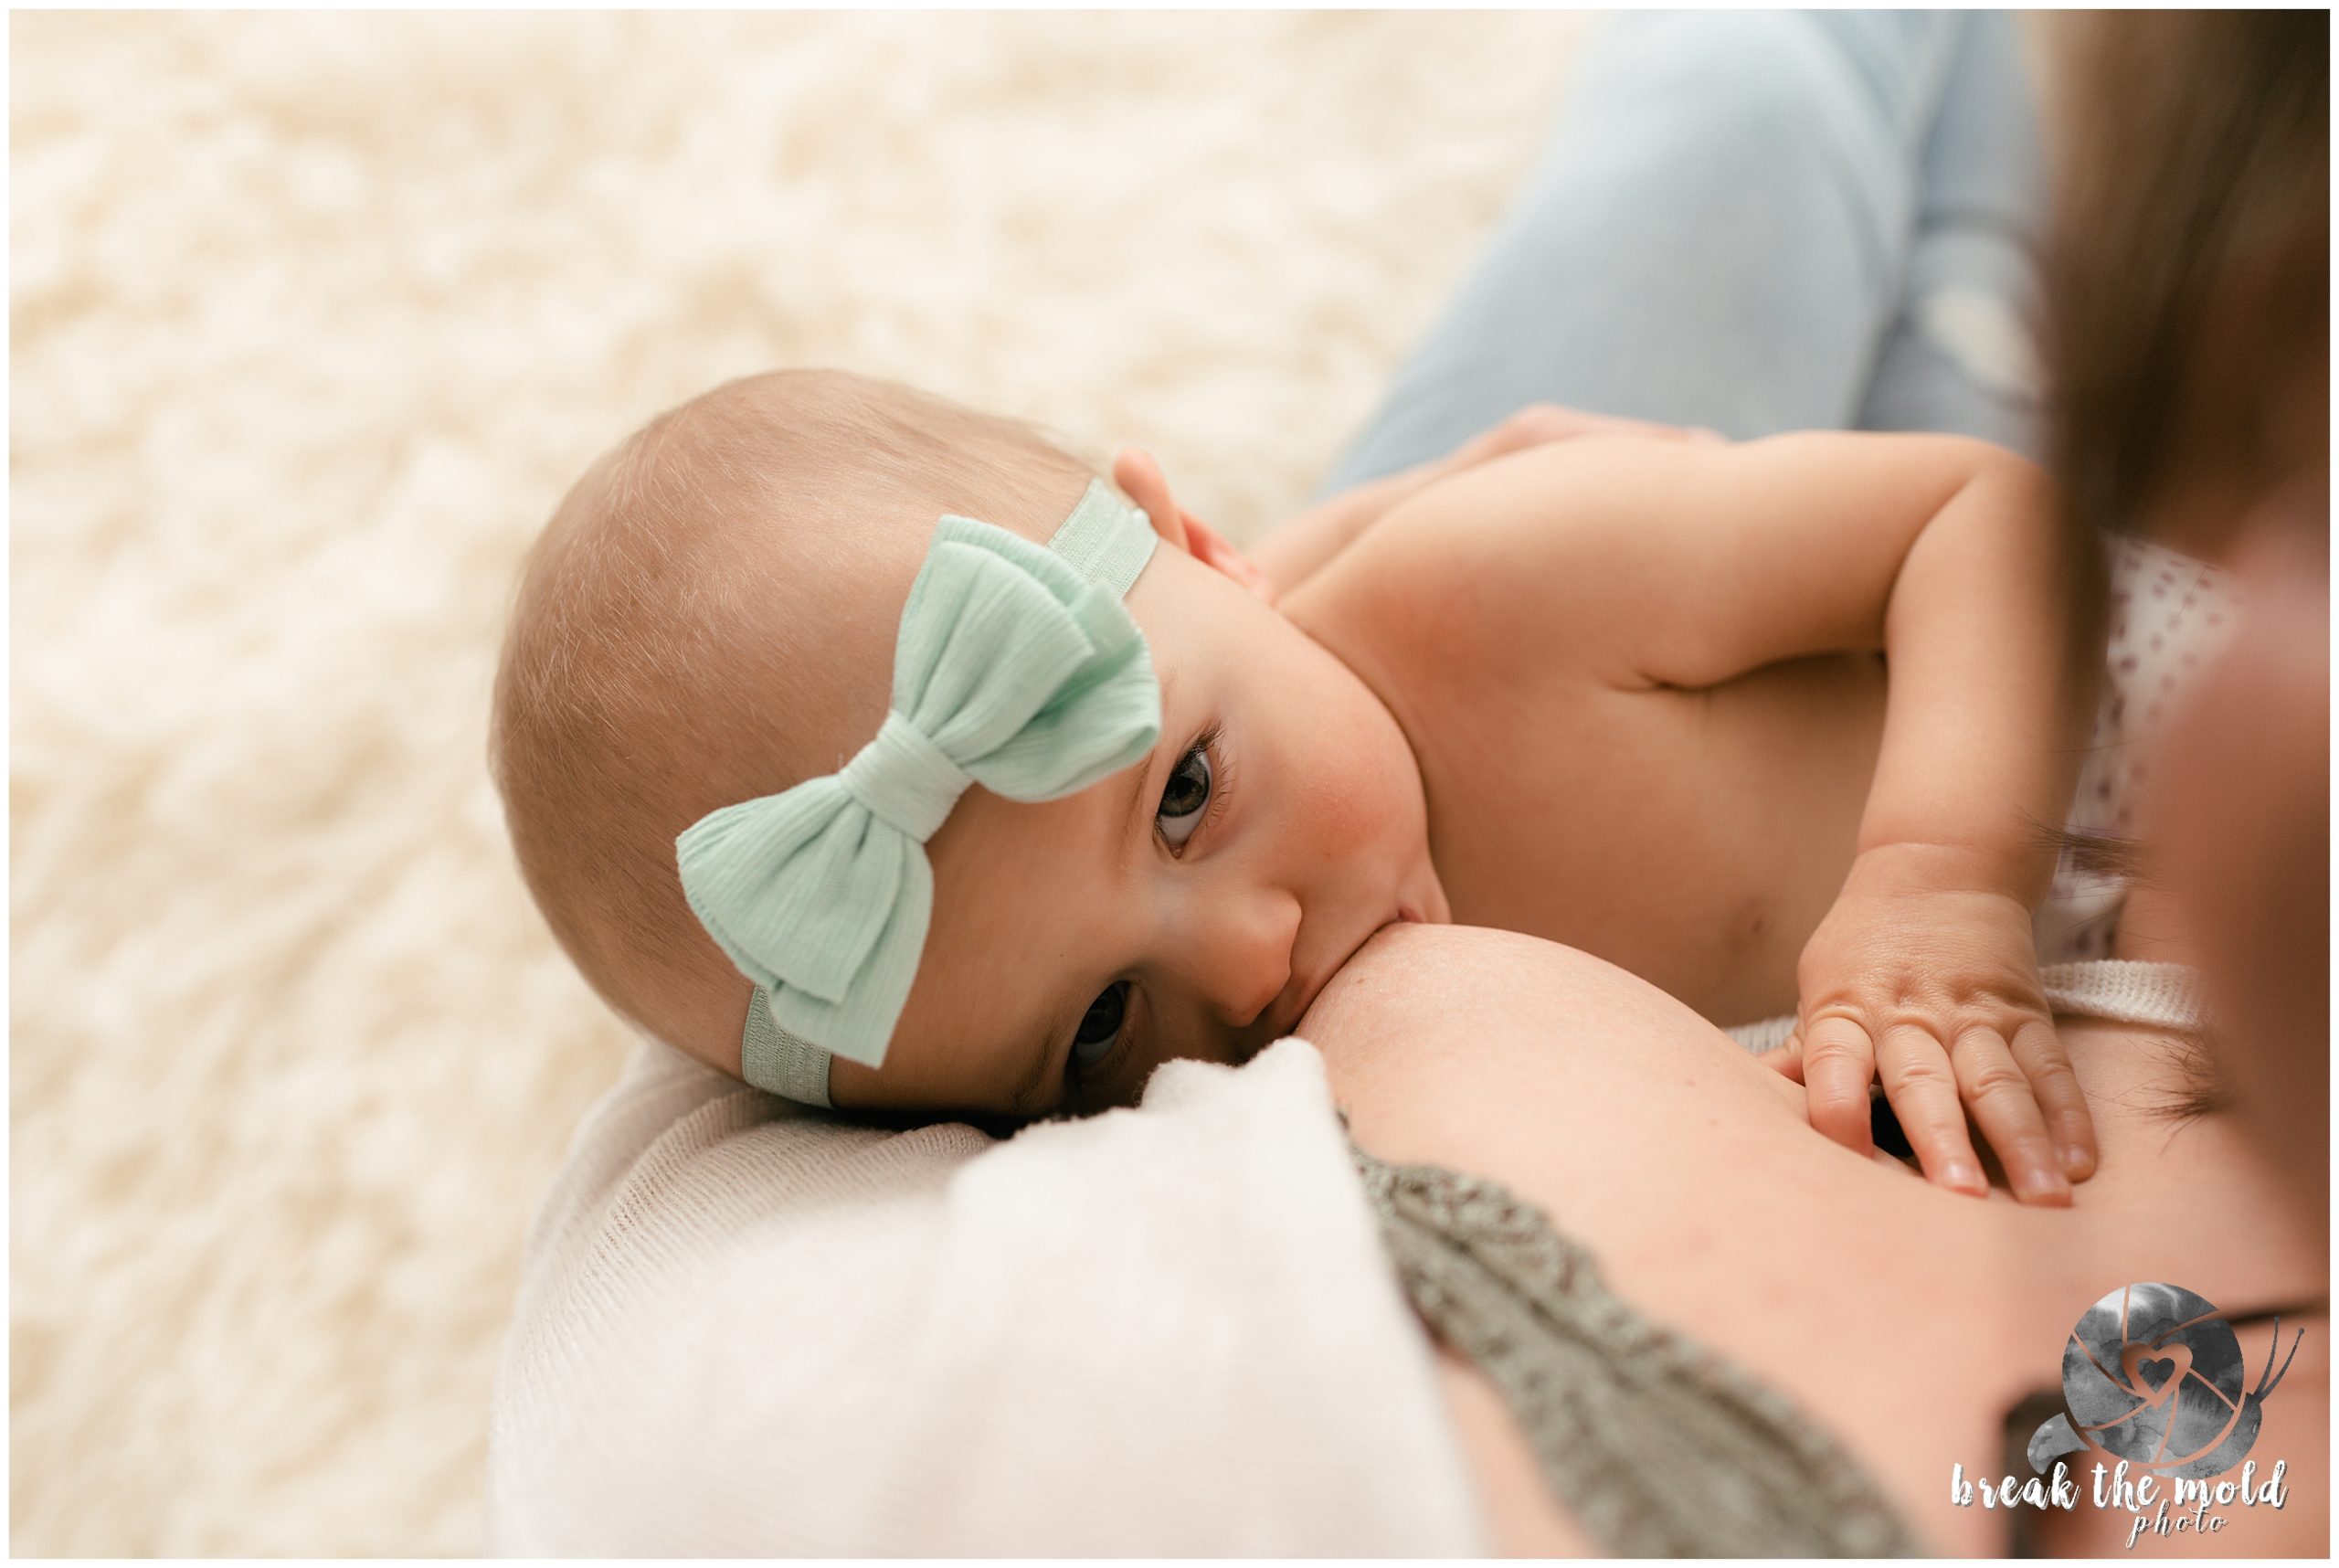 break-the-mold-photo-studio-knoxville-breastfeeding-photographer-mommy-baby-child-breastfed-portraits_0045.jpg